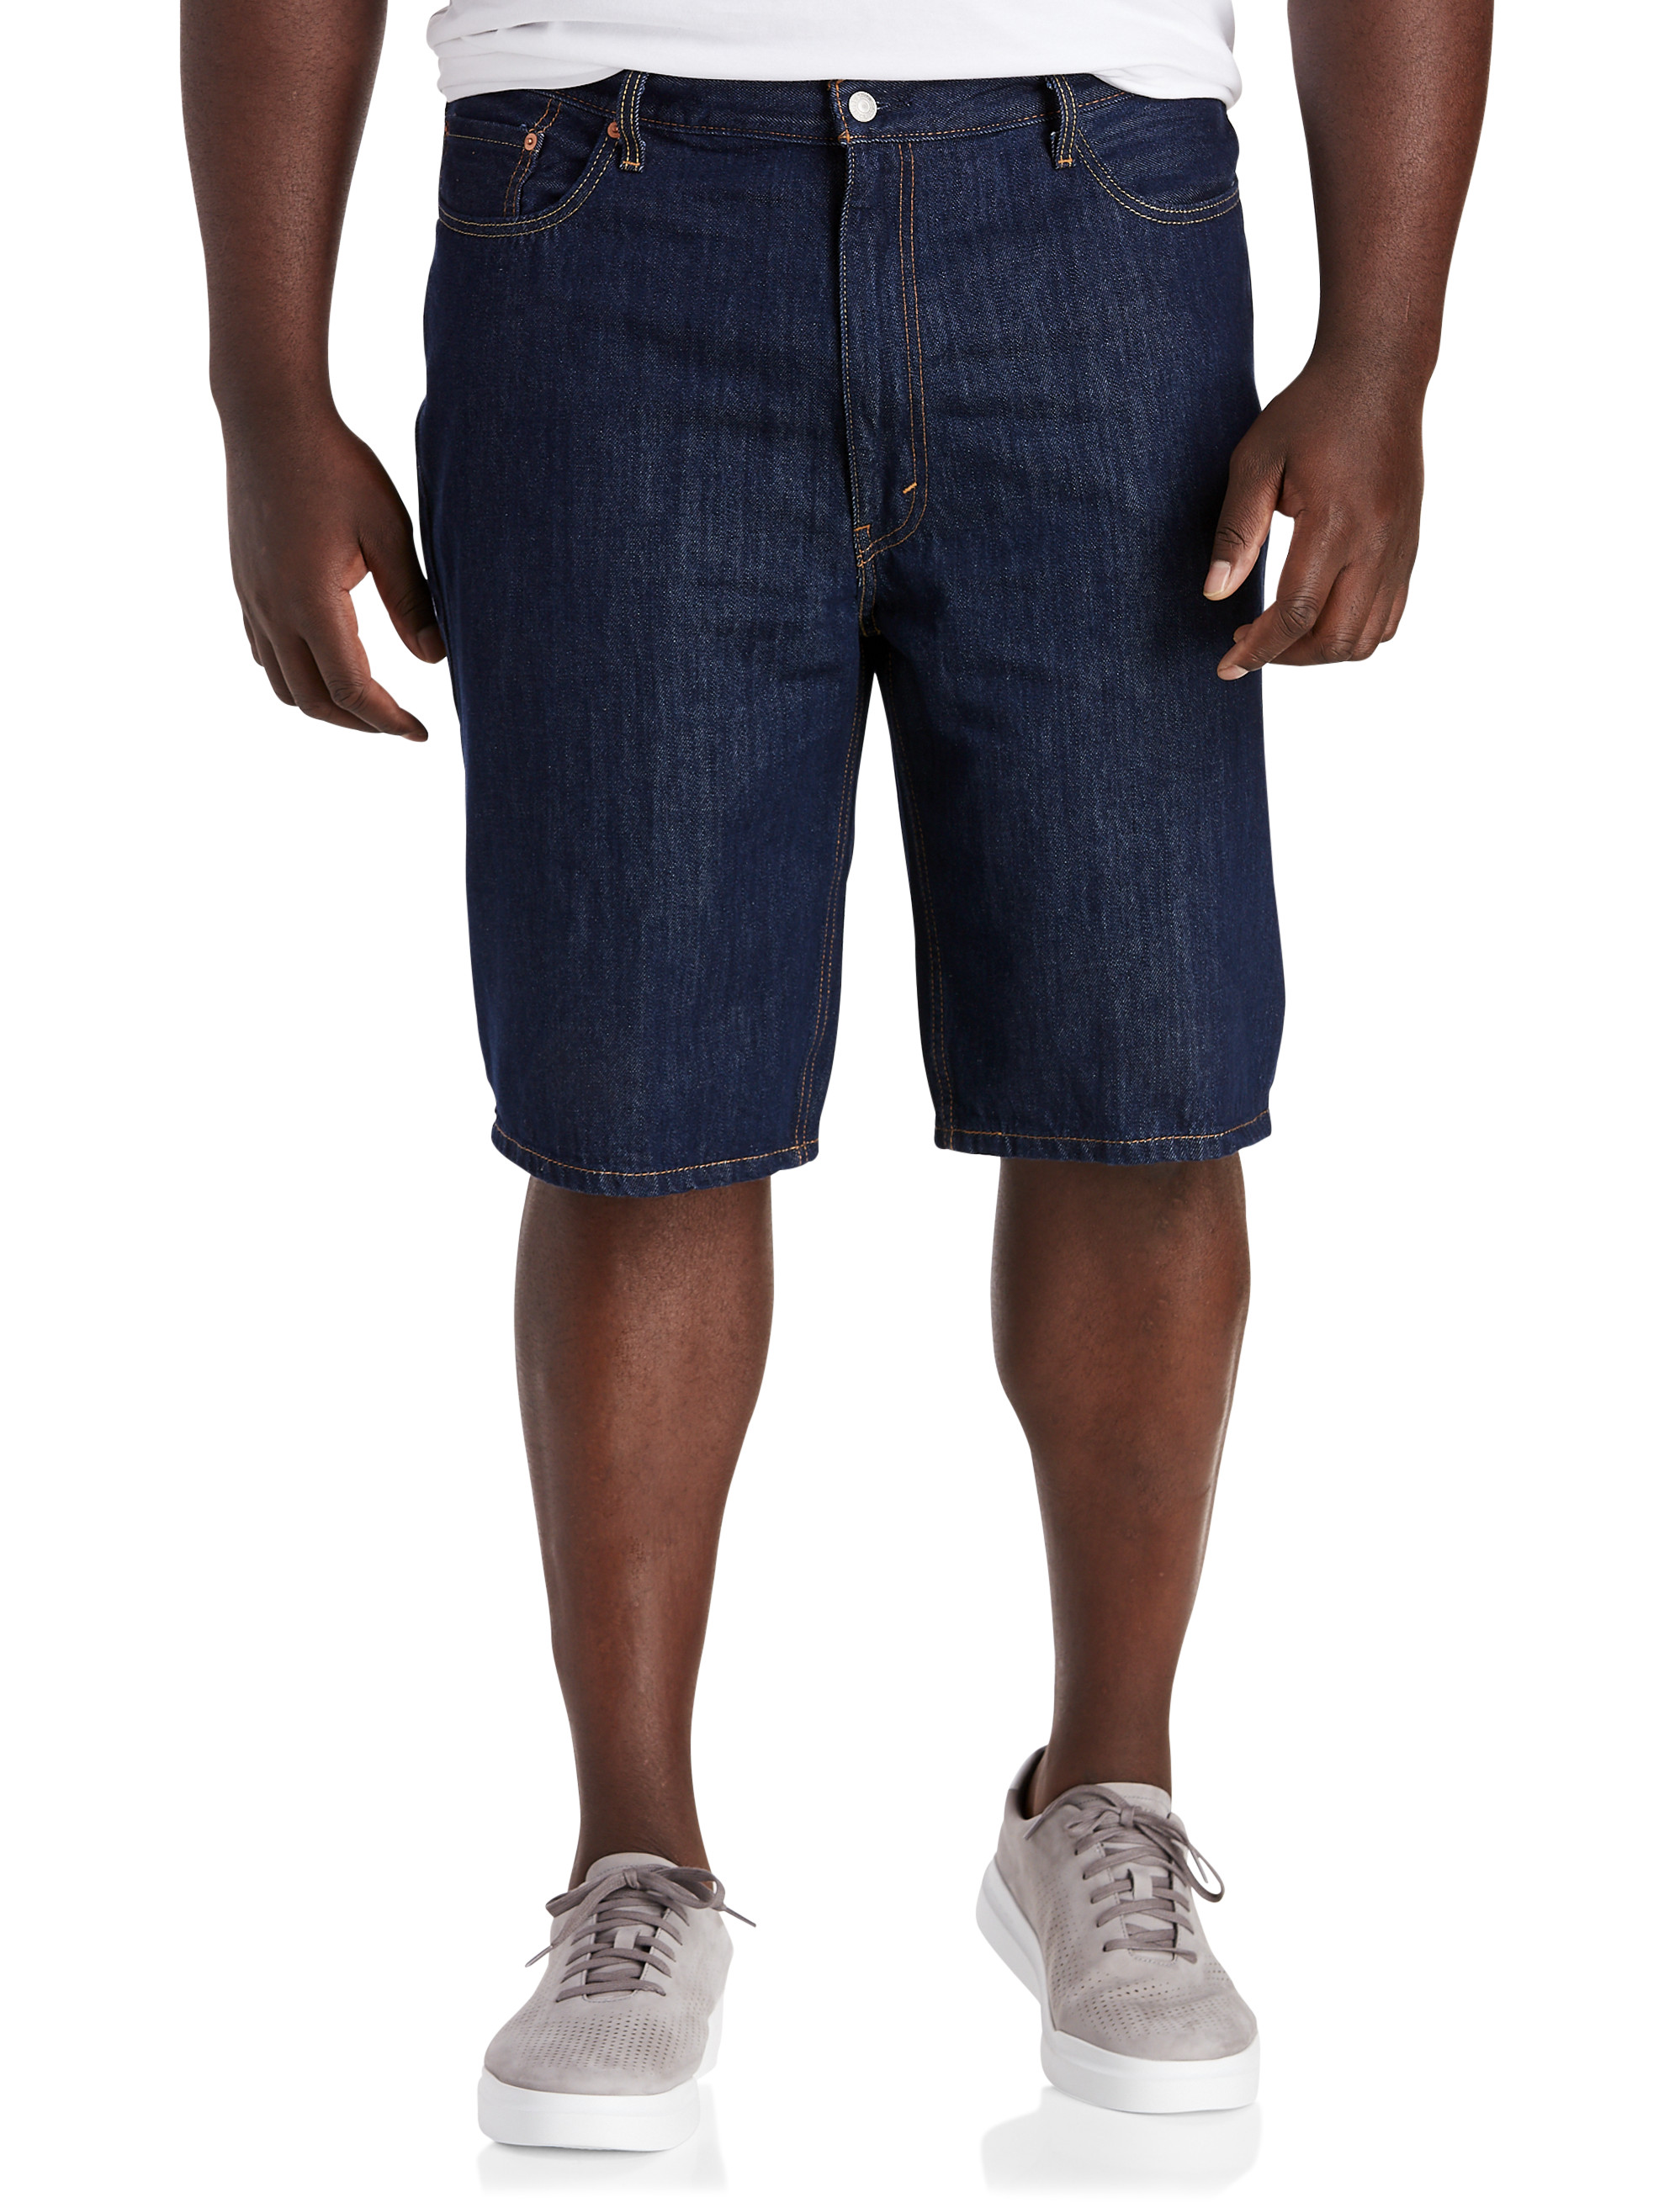 Men's Denim Shorts, Big and Tall